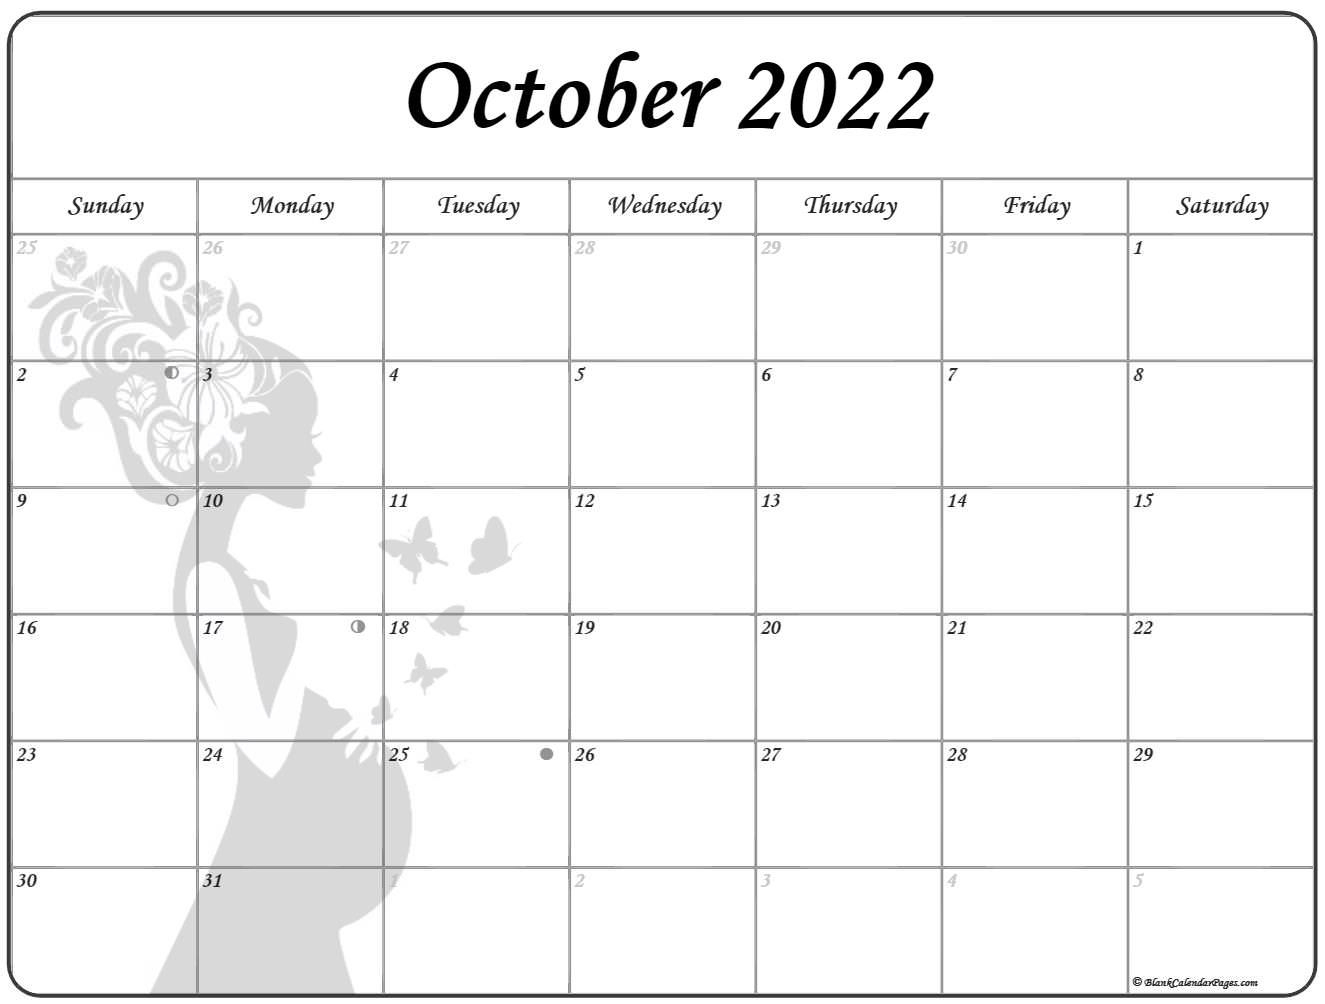 October 2022 Pregnancy Calendar | Fertility Calendar